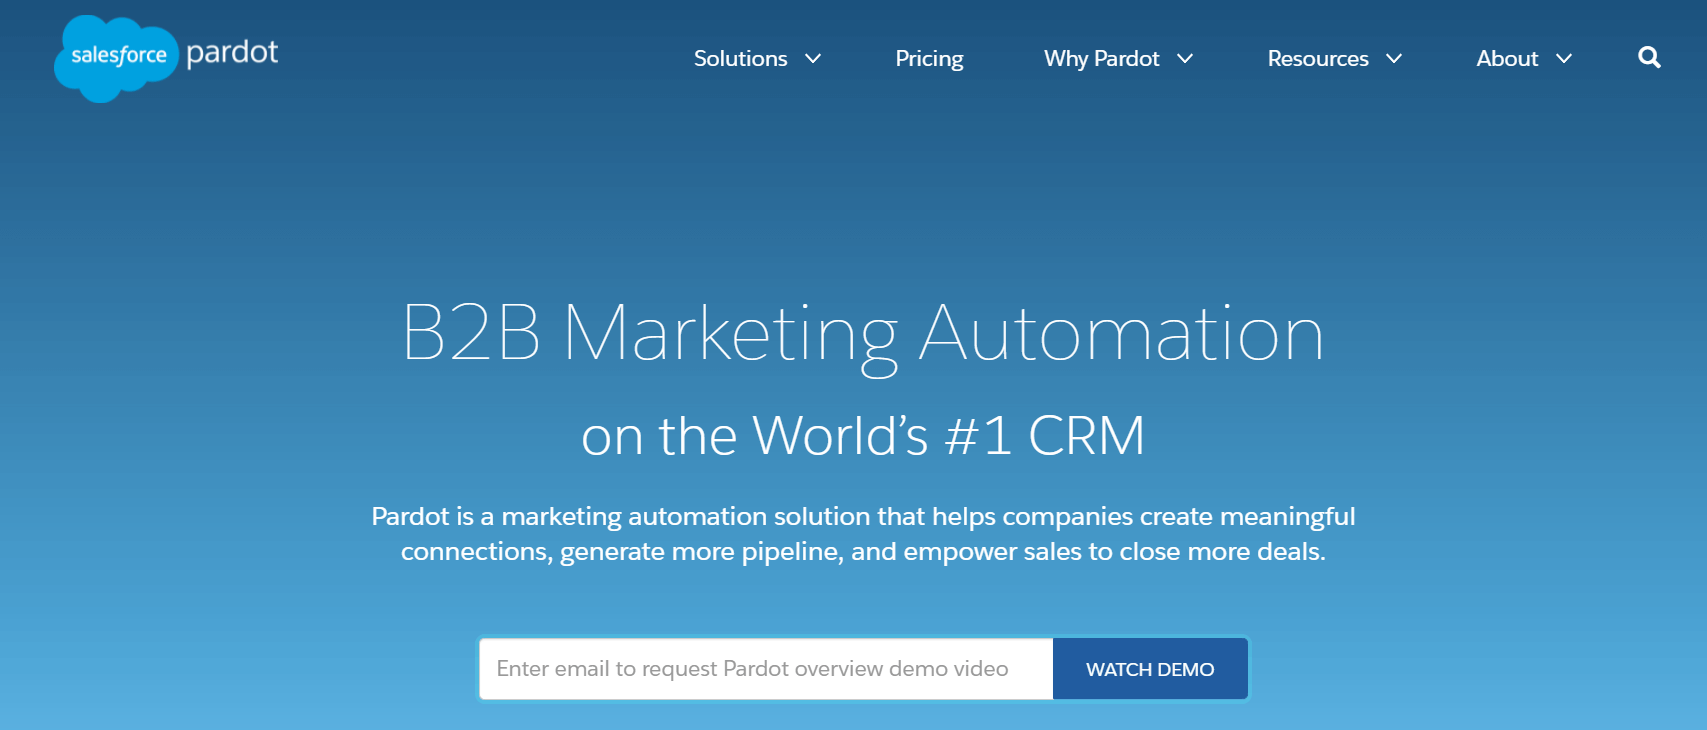 Salesforce Pardot marketing automation software